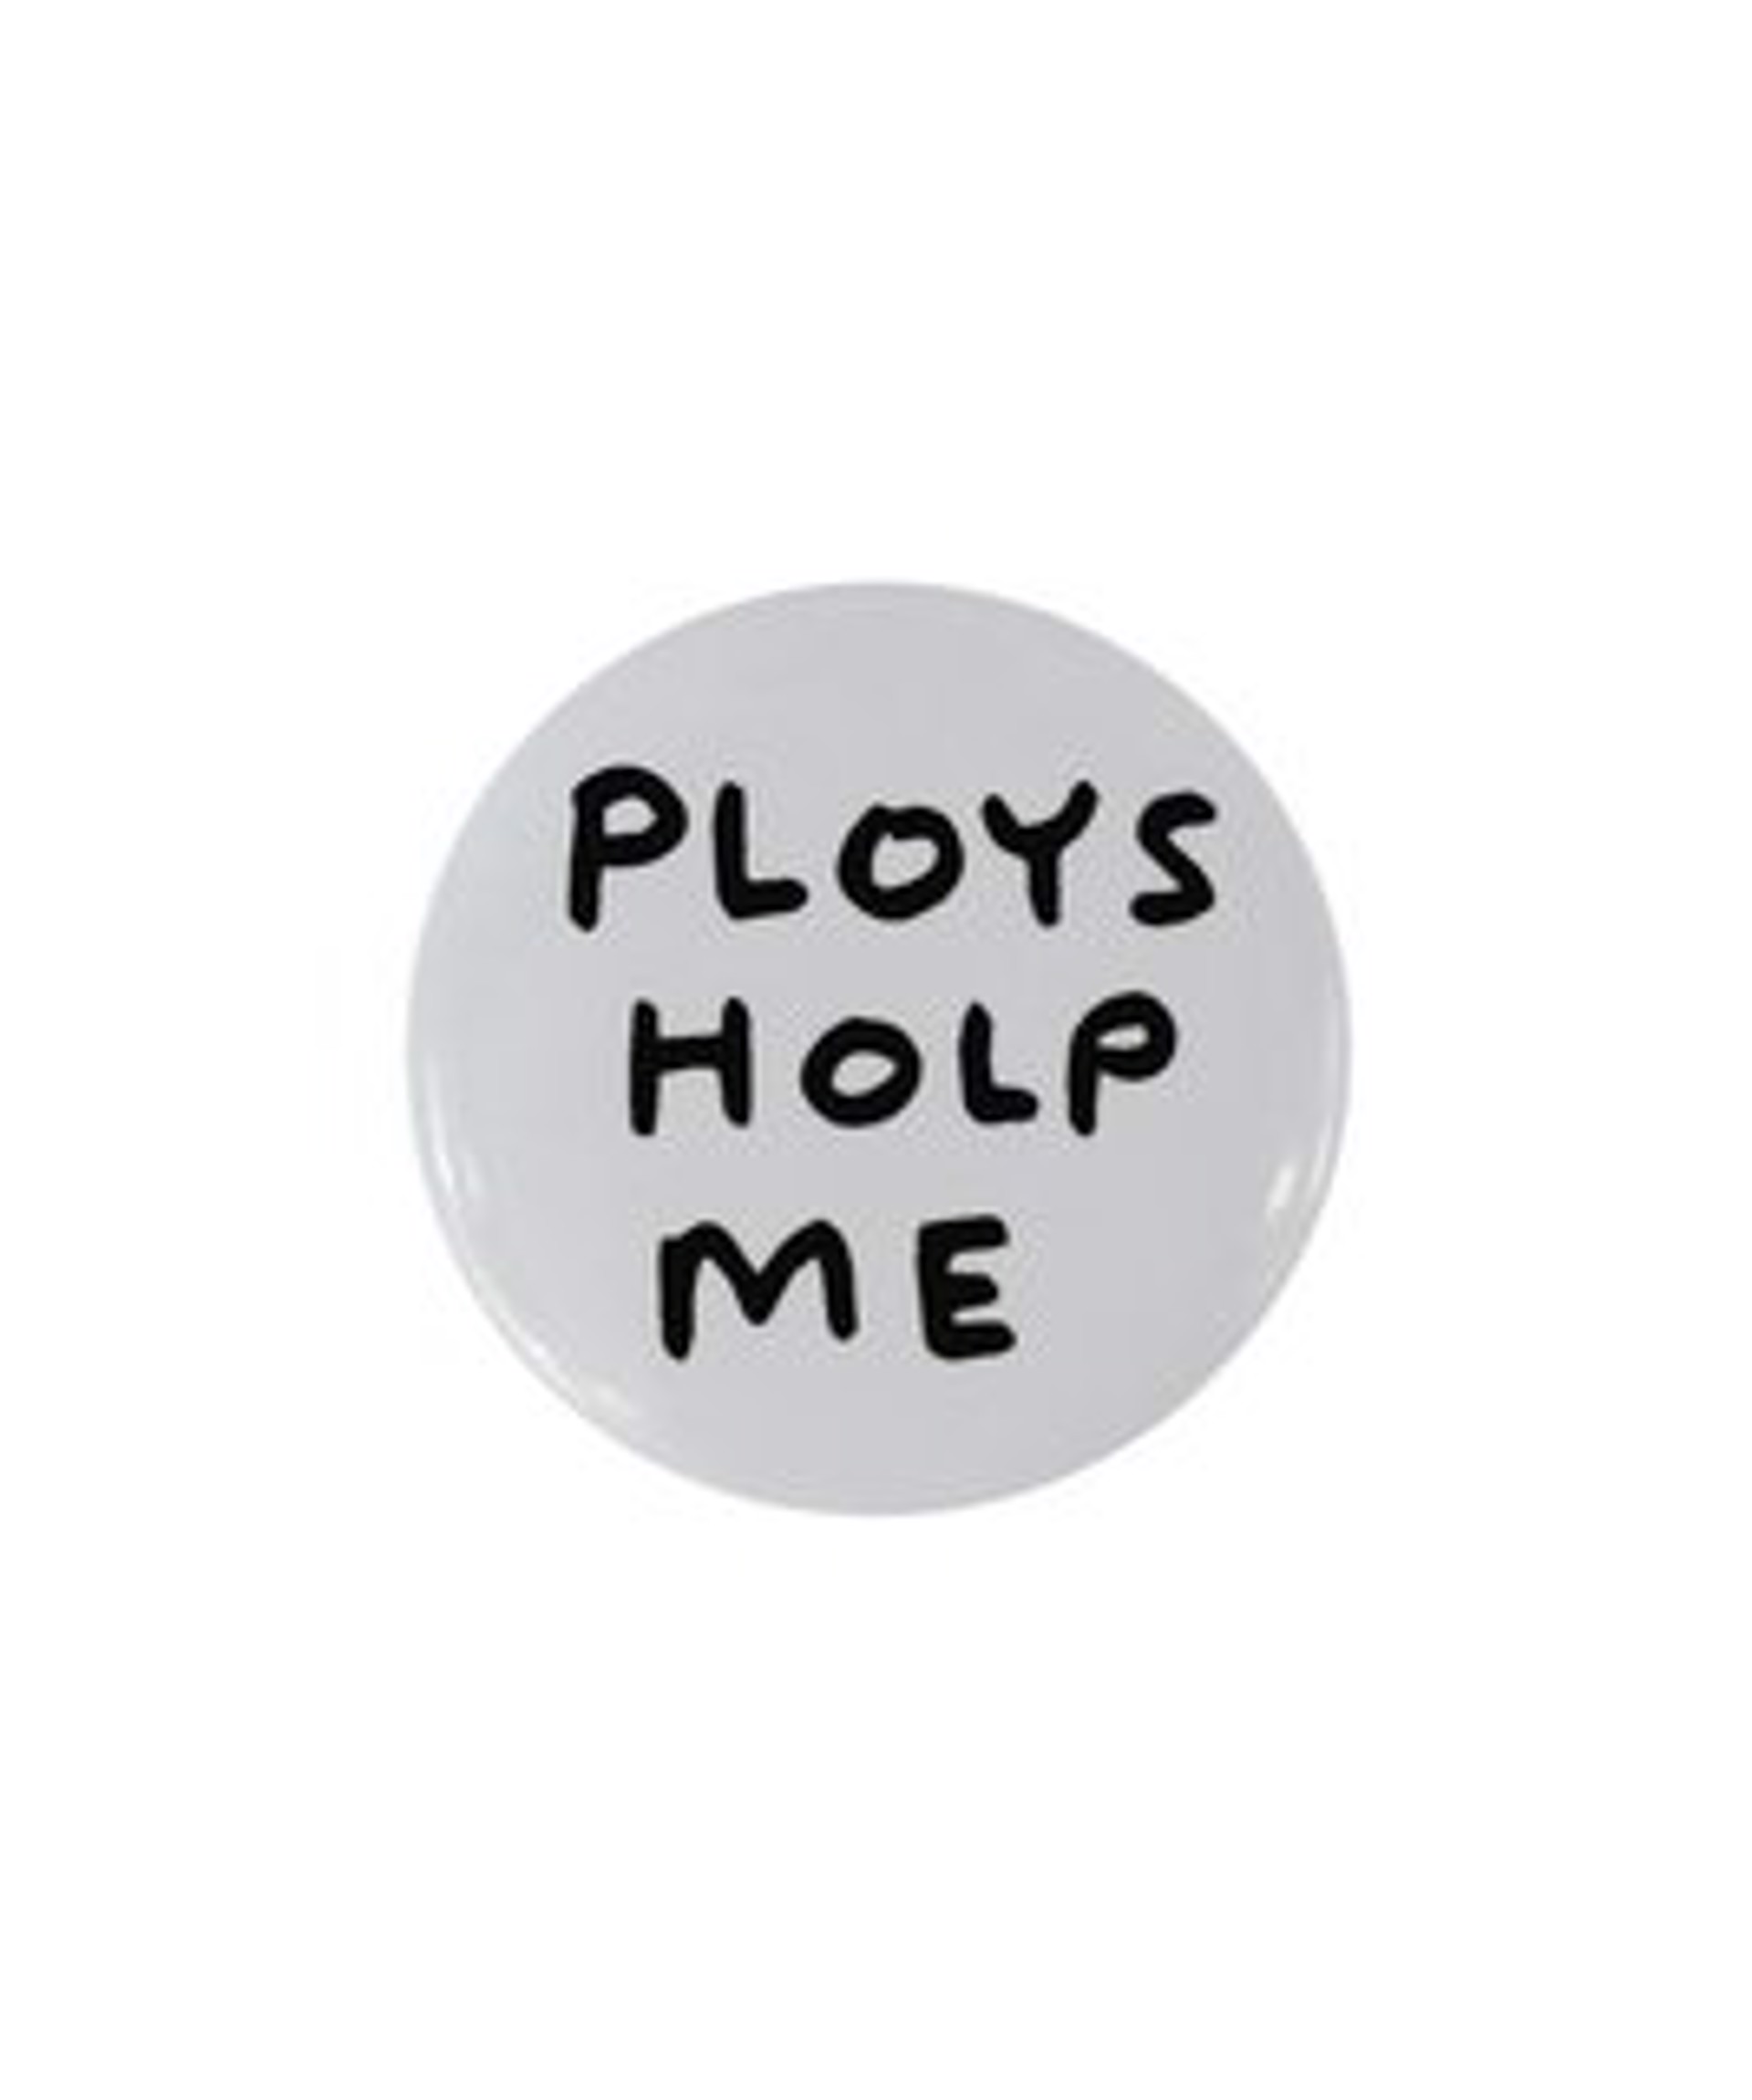 Ploys Holp Me Pin Badge by David Shrigley